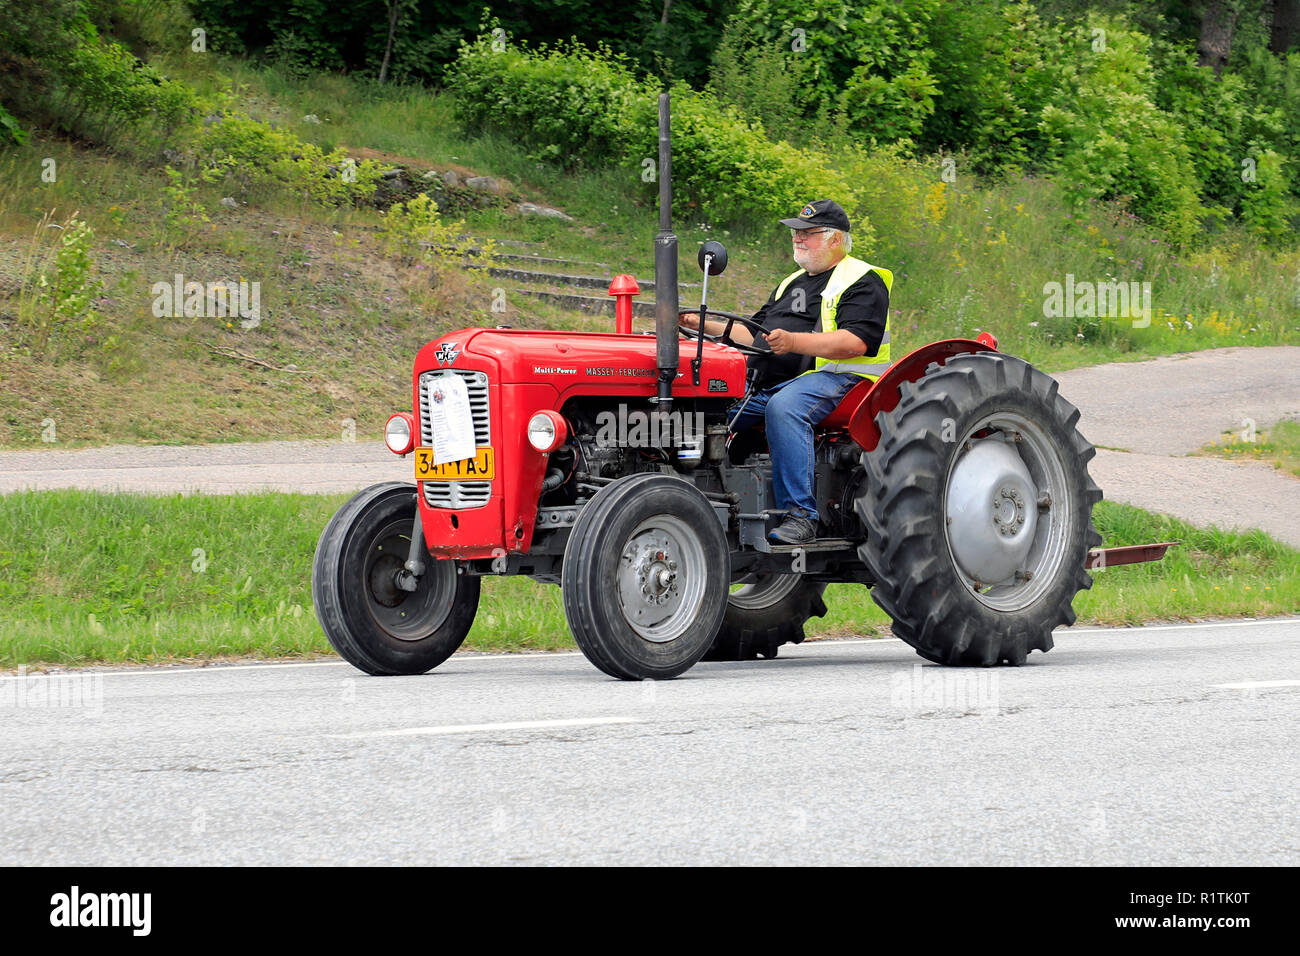 Classic Massey-Ferguson 35 tractor and driver on Kimito Tractorkavalkad, Tractor Cavalcade, an annual tractor show in Kimito, Finland - July 7, 2018. Stock Photo